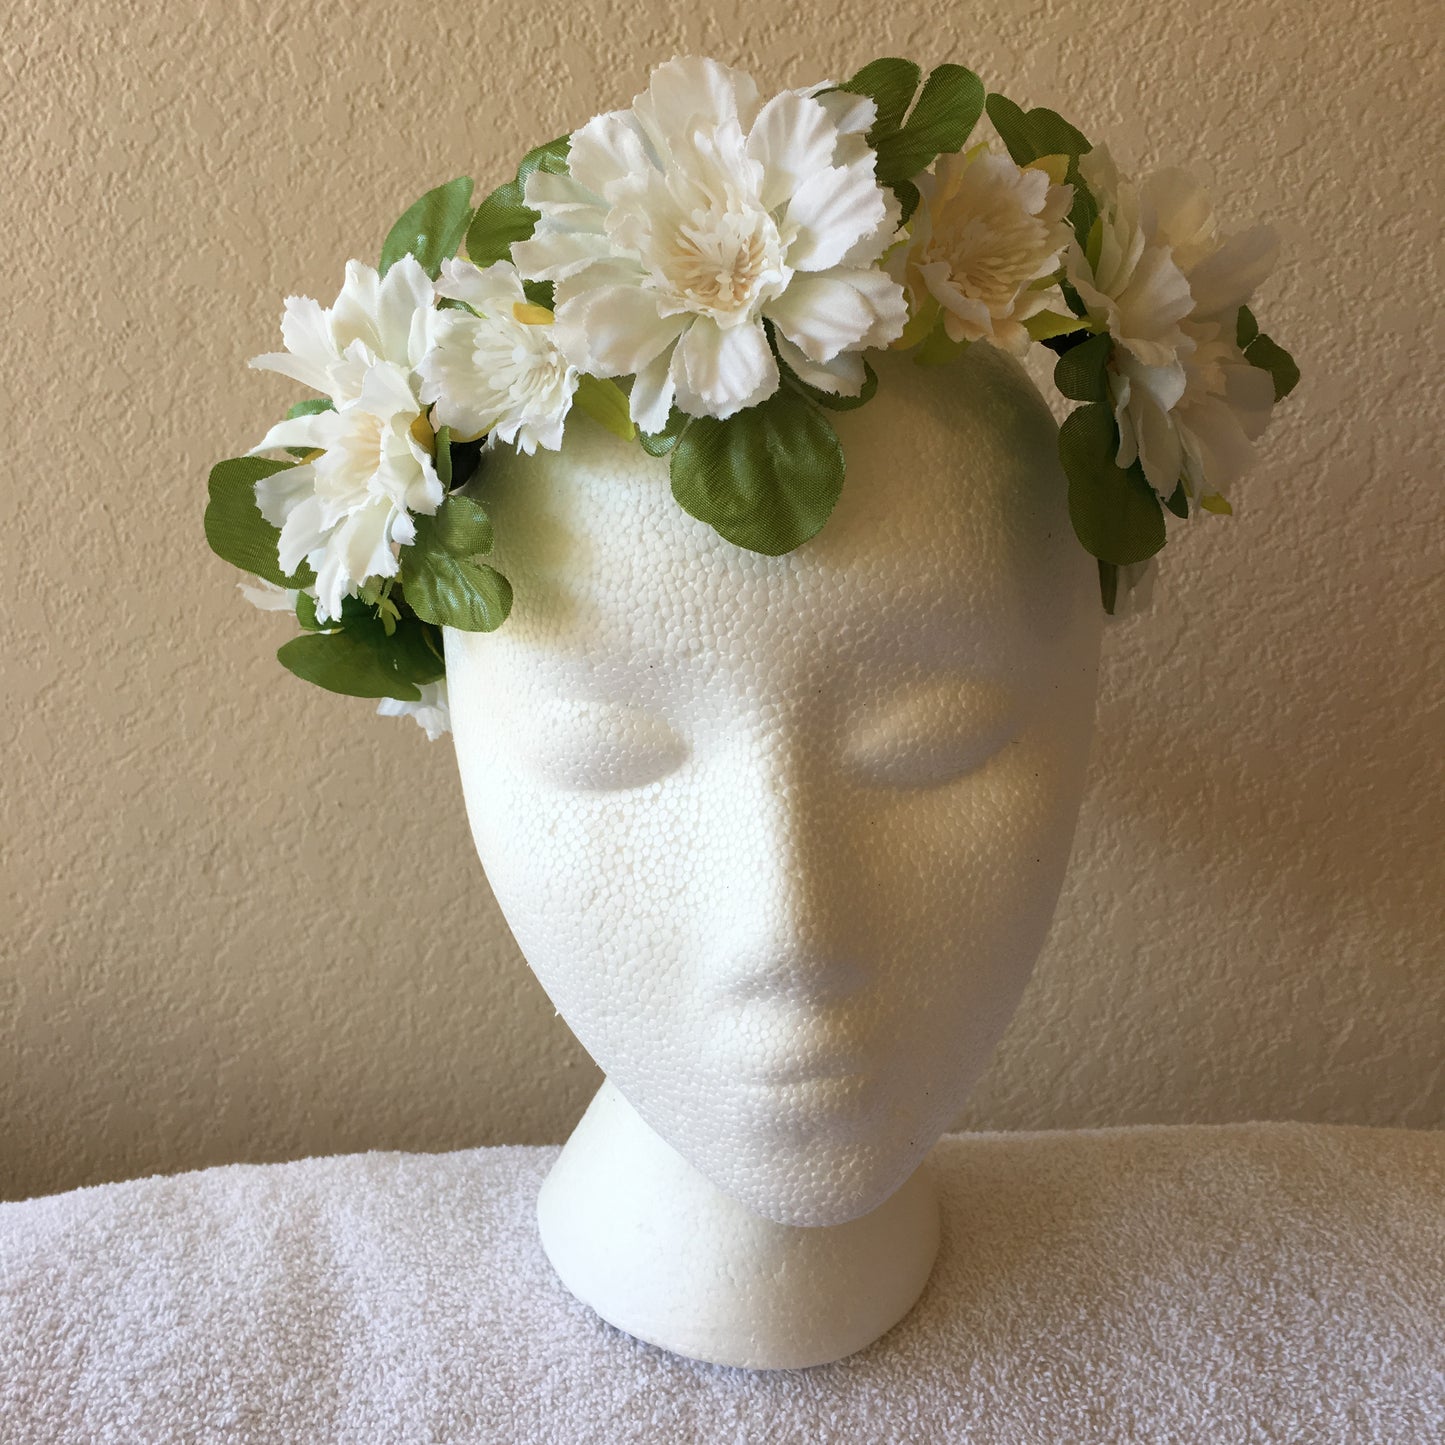 Medium Wreath - White flowers w/ little white flower accents